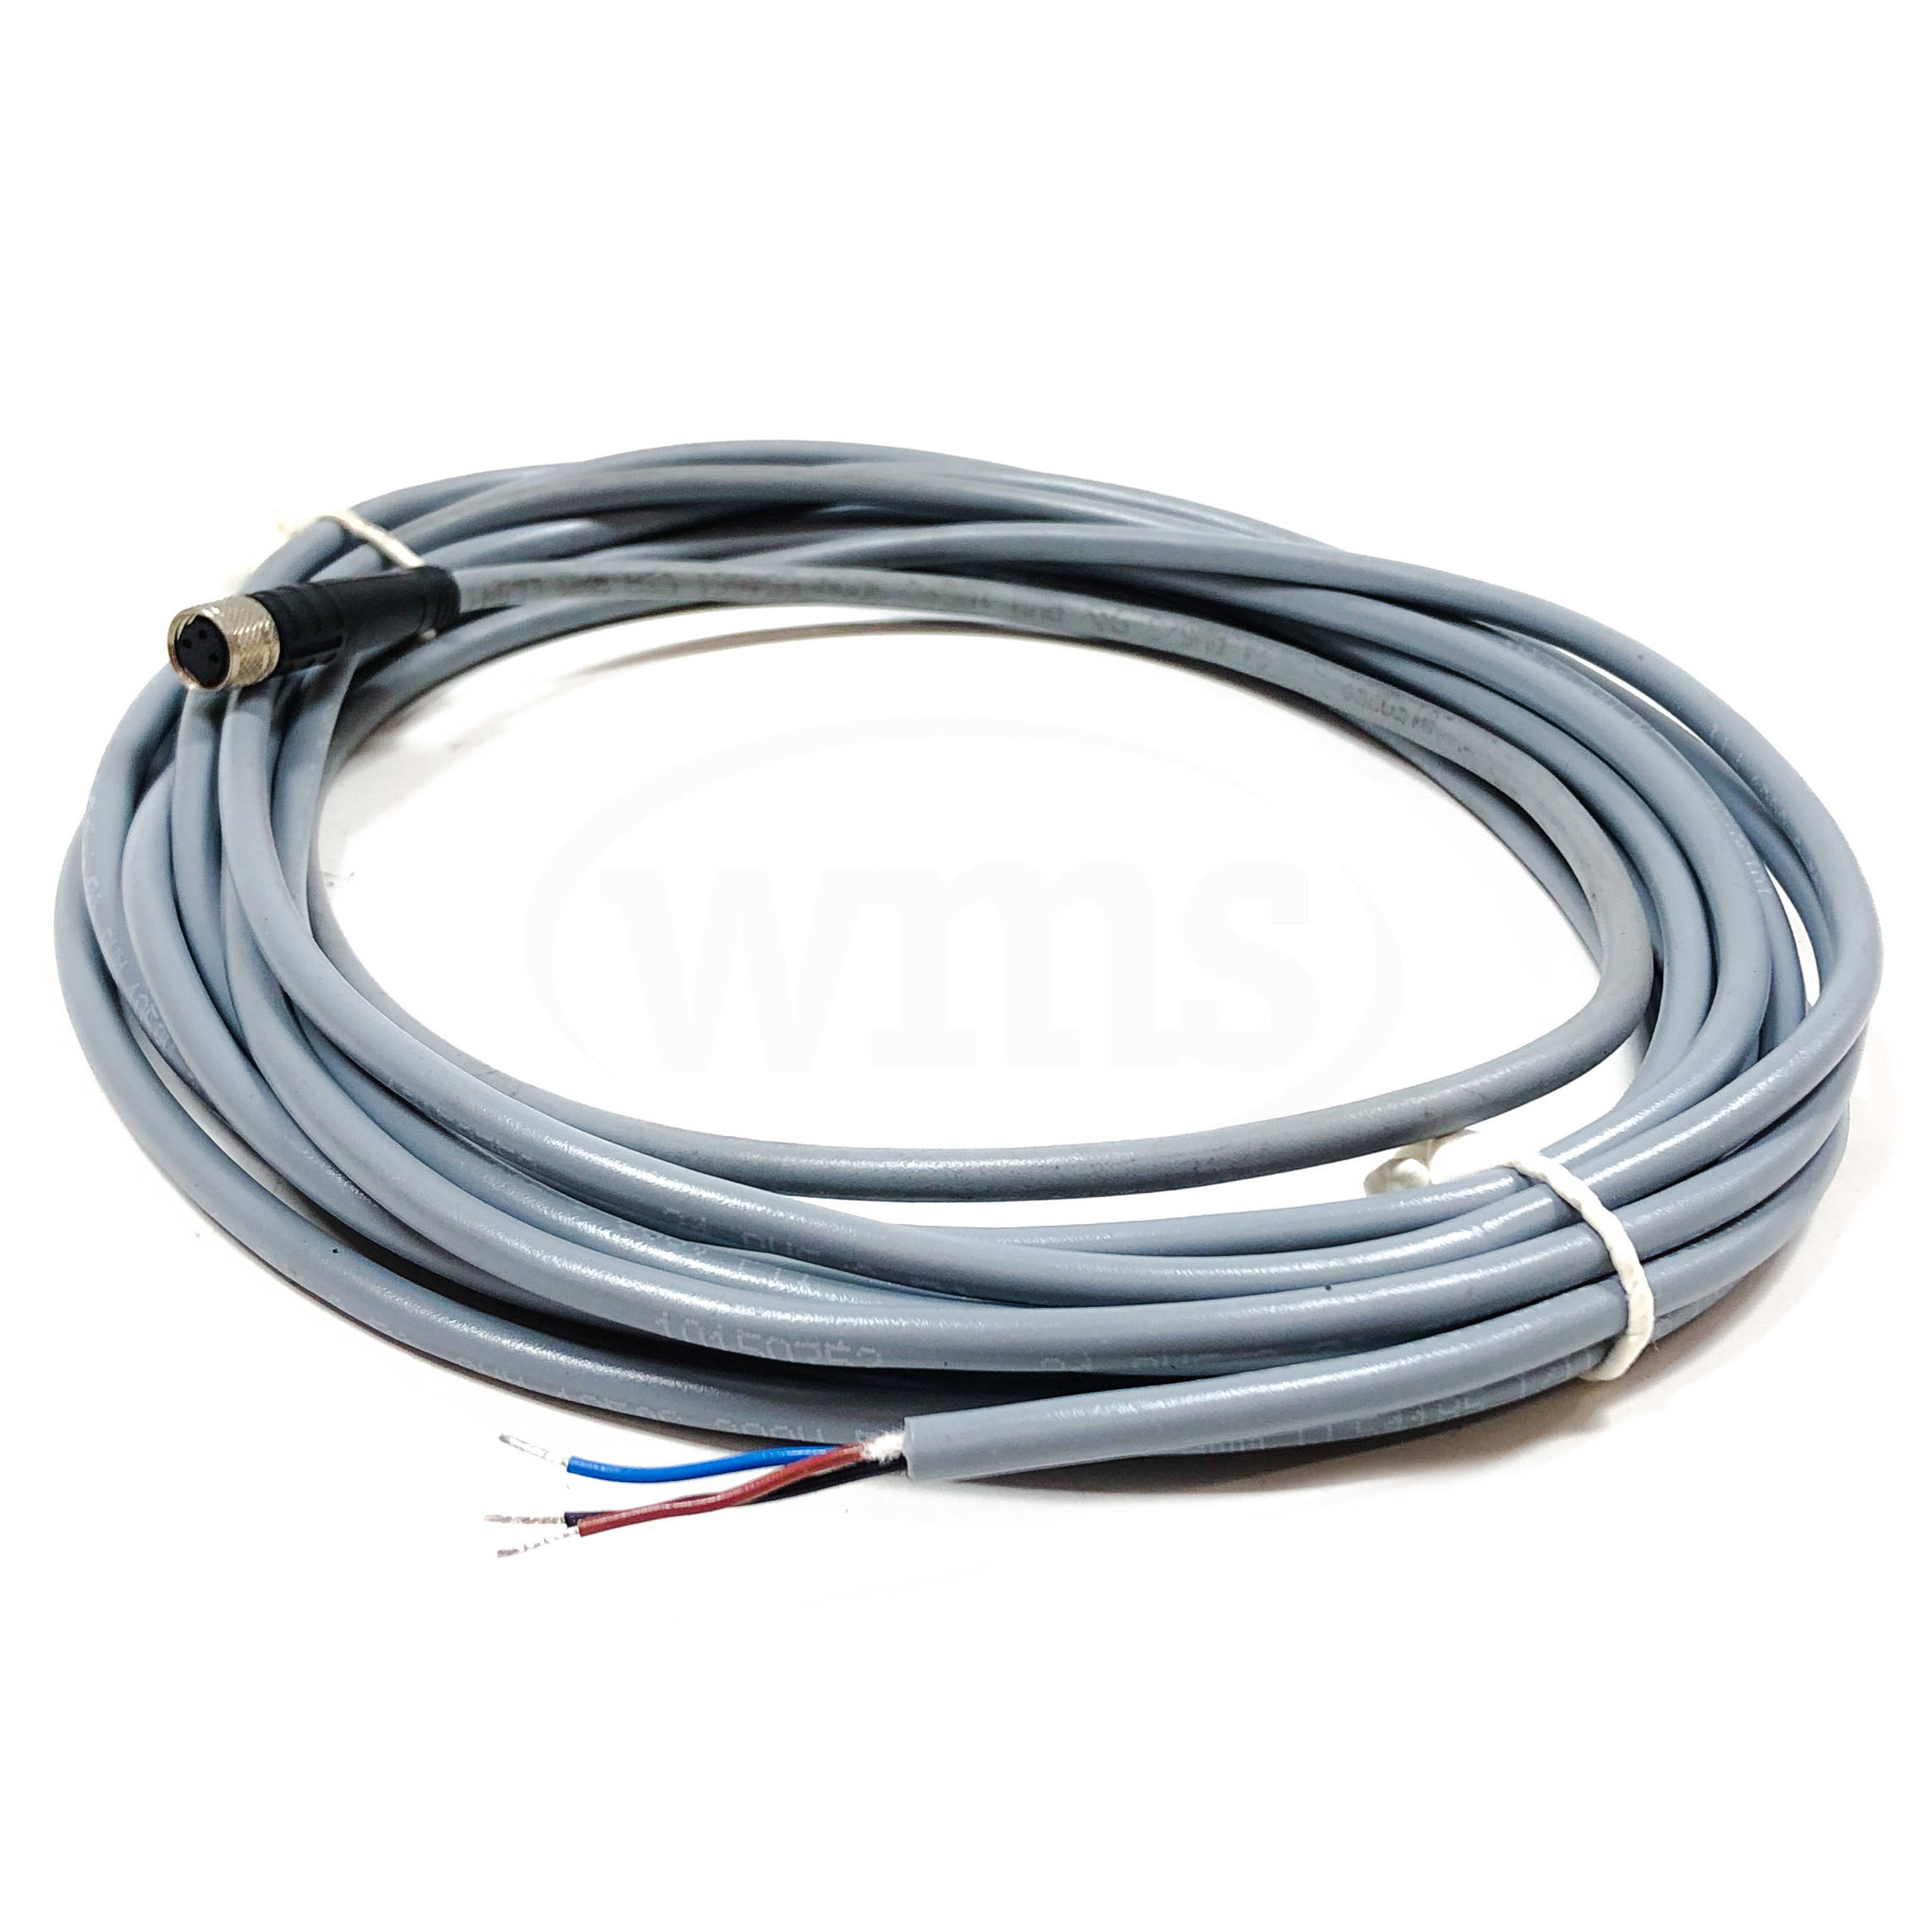 MRQCX Bimba Cable, 24AWG/3 3